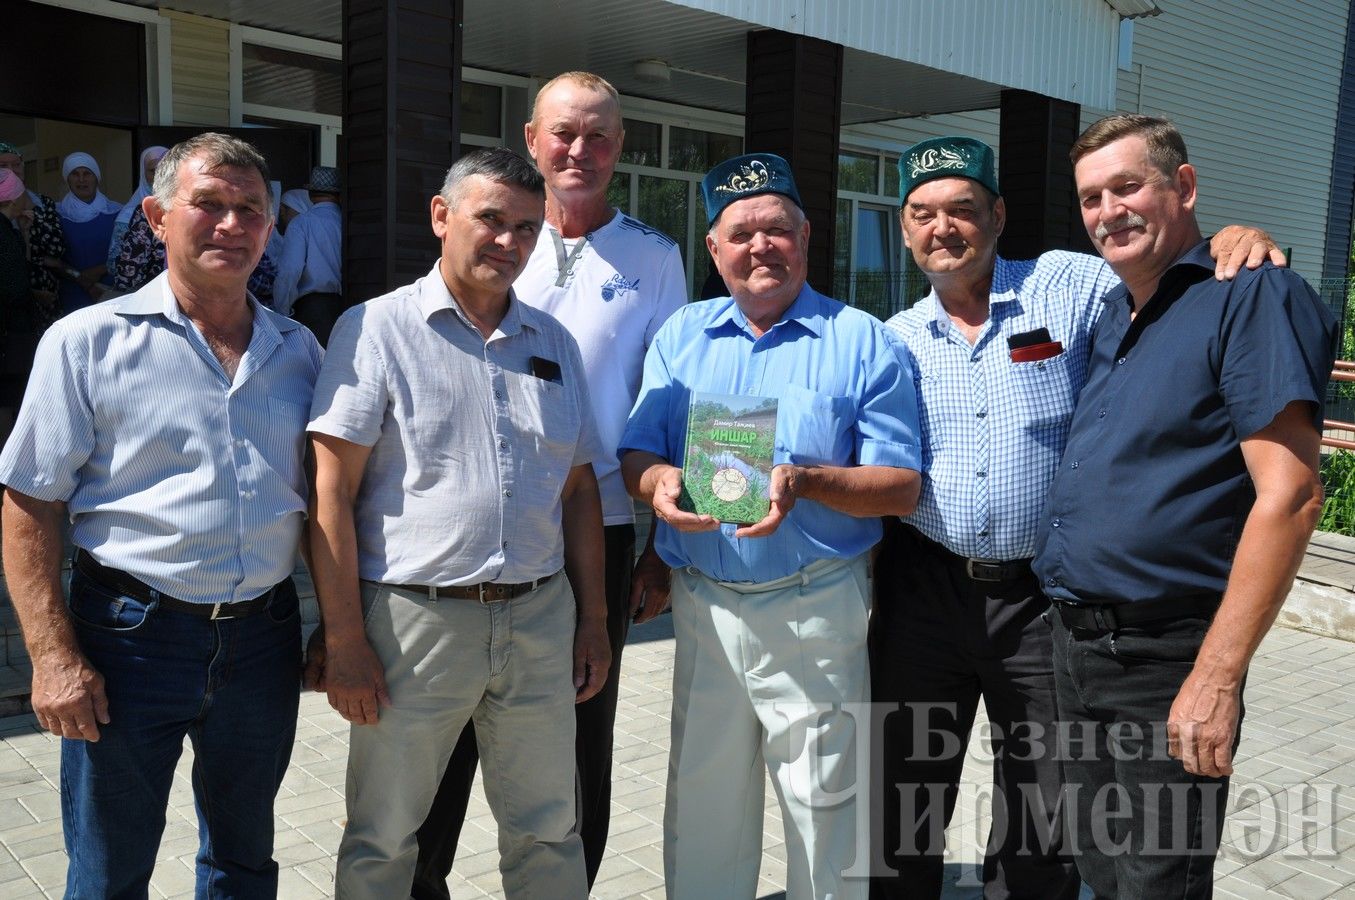 В Черемшанском районе презентовали книгу истории села Иншар (ФОТОРЕПОРТАЖ)